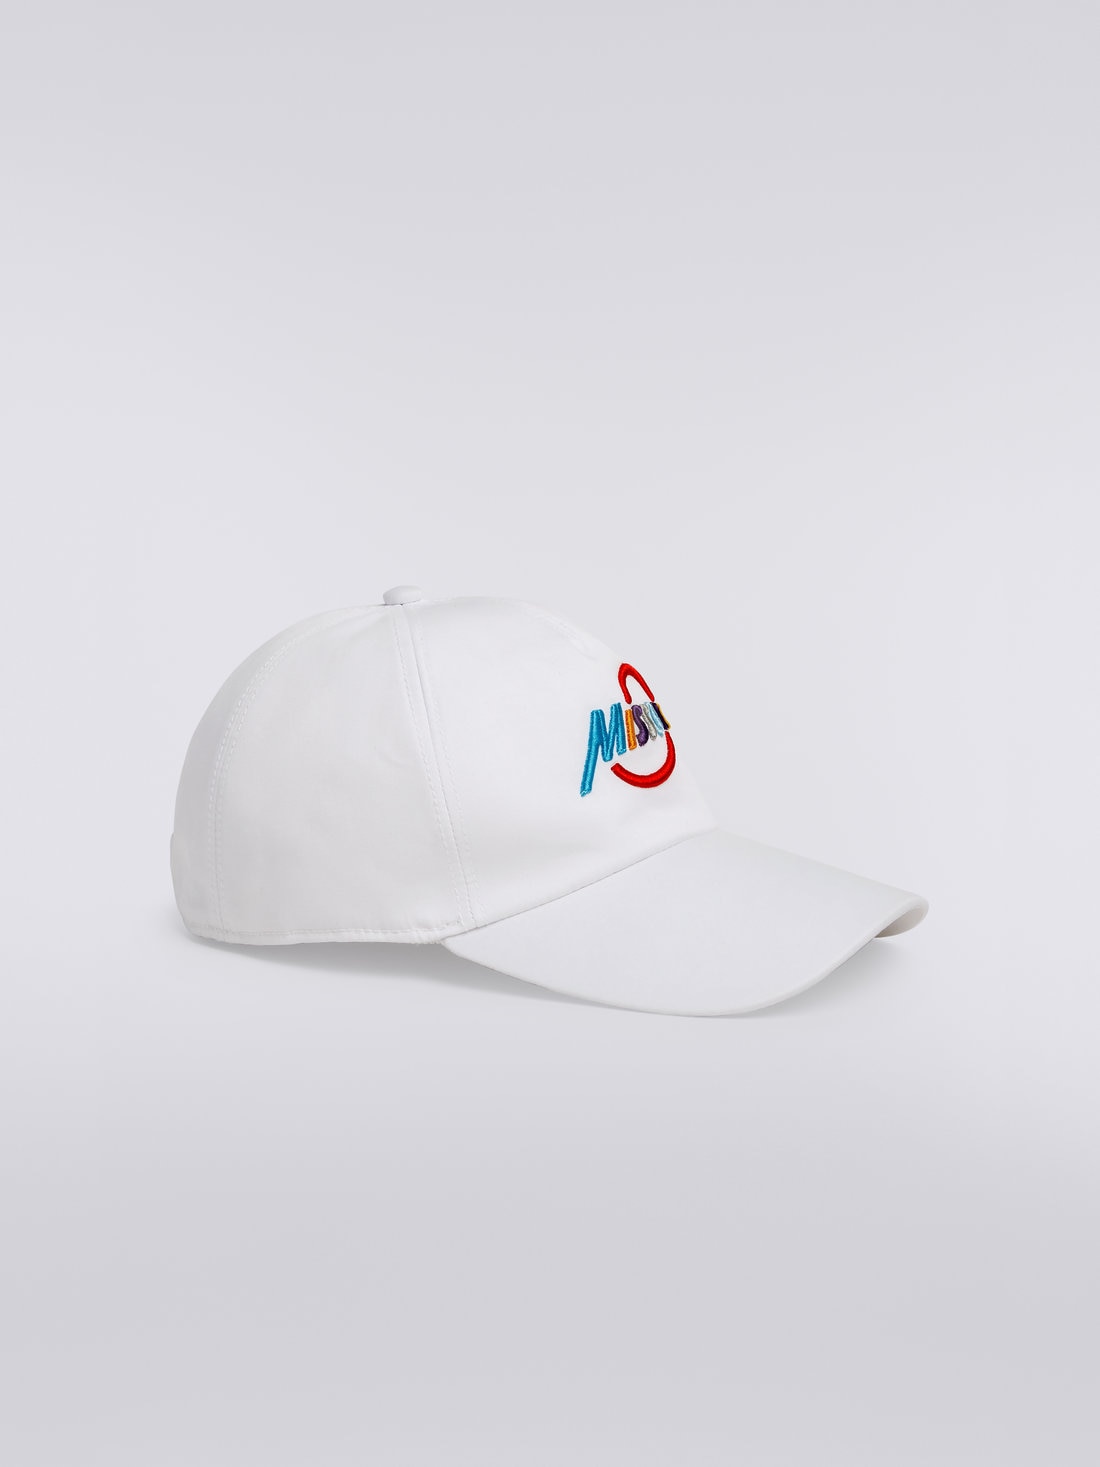 Cotton visor hat with multicoloured logo lettering, White  - 8051575776939 - 1